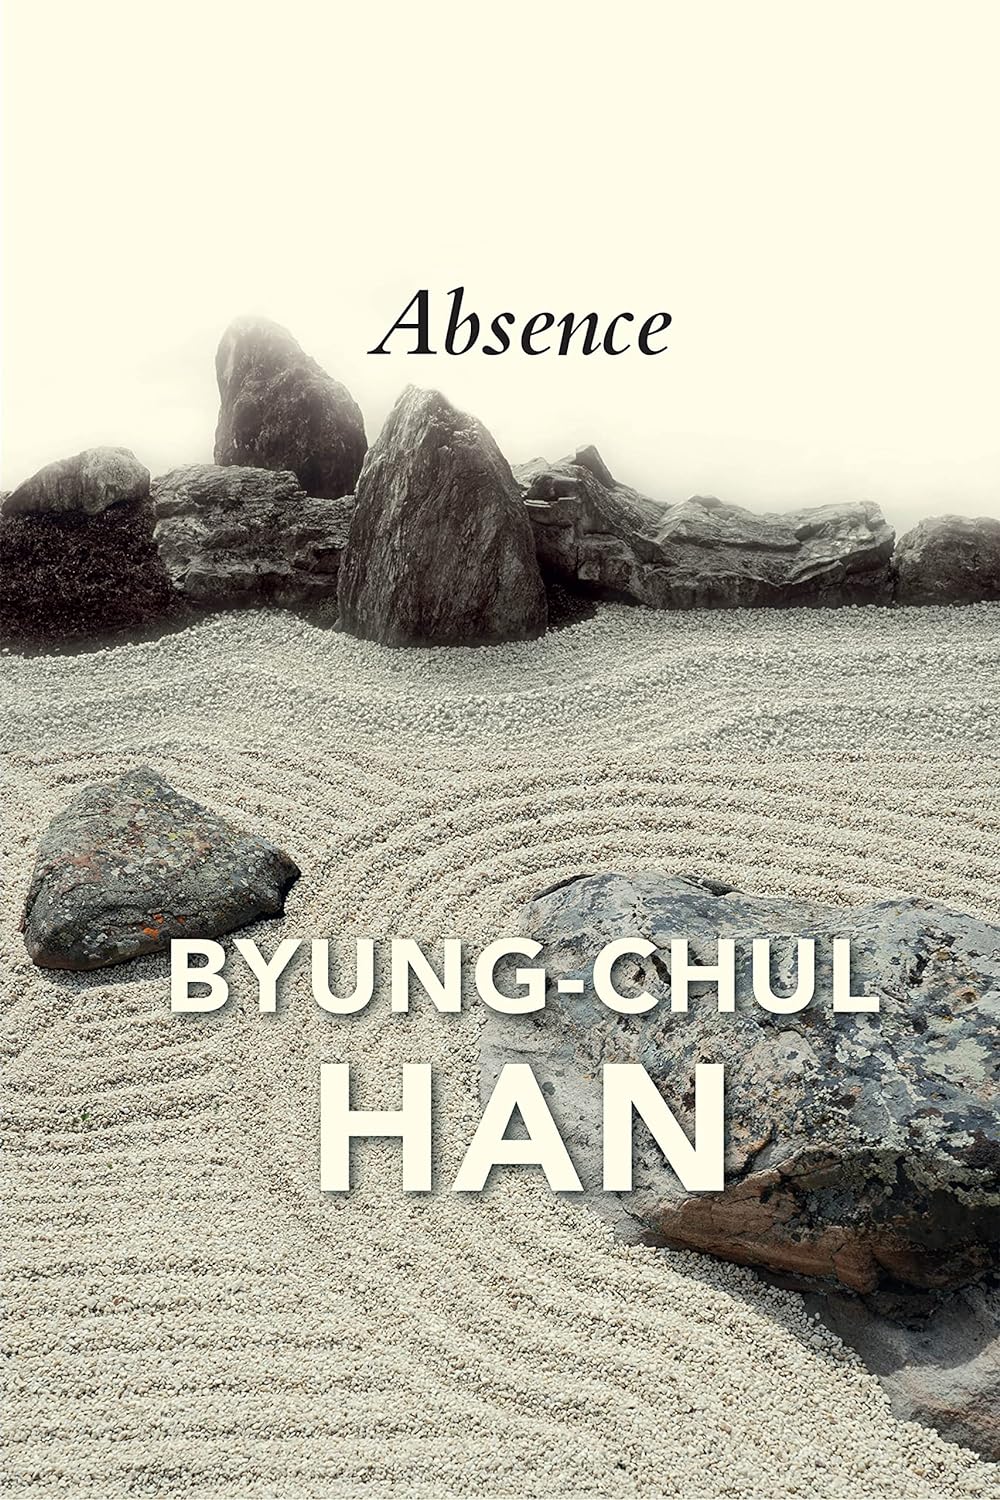 Absence: On the Culture and Philosophy of the Far East ร้านหนังสือและสิ่งของ เป็นร้านหนังสือภาษาอังกฤษหายาก และร้านกาแฟ หรือ บุ๊คคาเฟ่ ตั้งอยู่สุขุมวิท กรุงเทพ